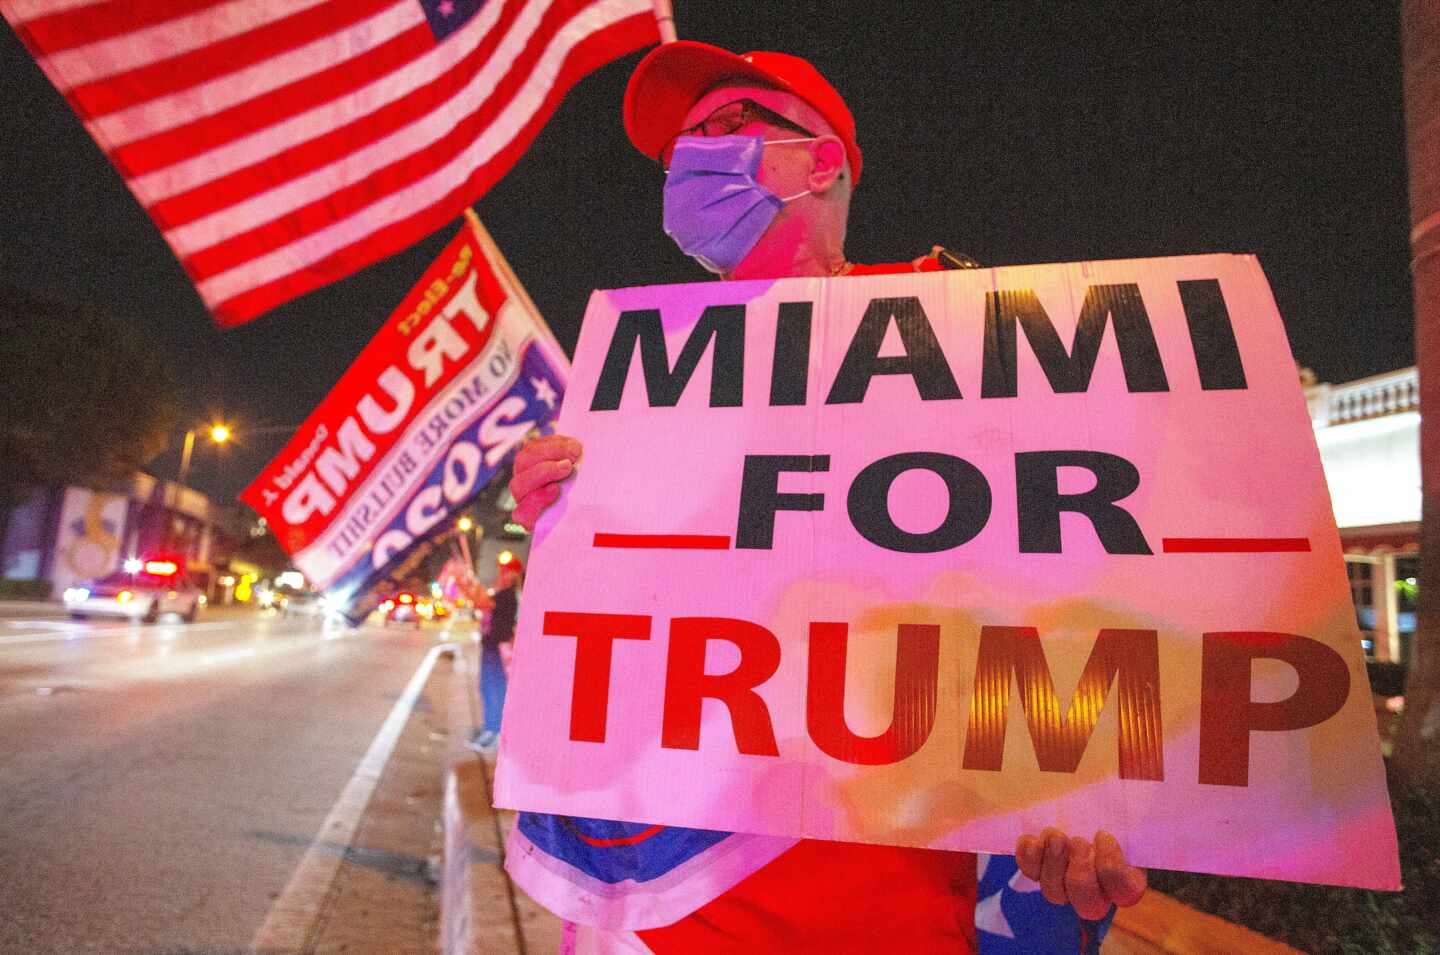 Trump-victoria-Florida